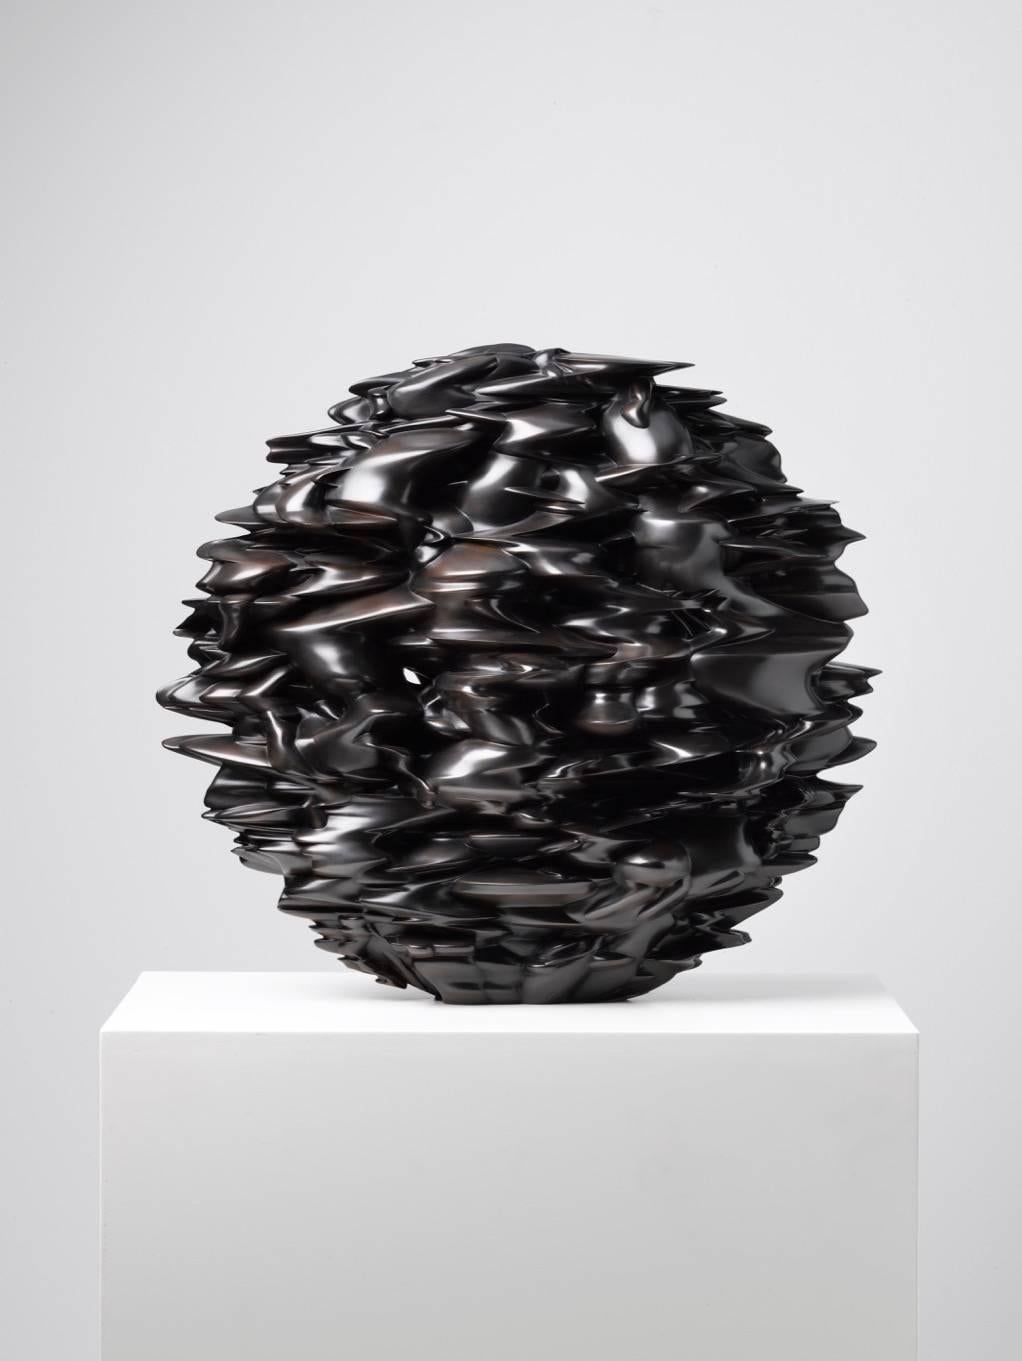 Tony Cragg Abstract Sculpture - Versus